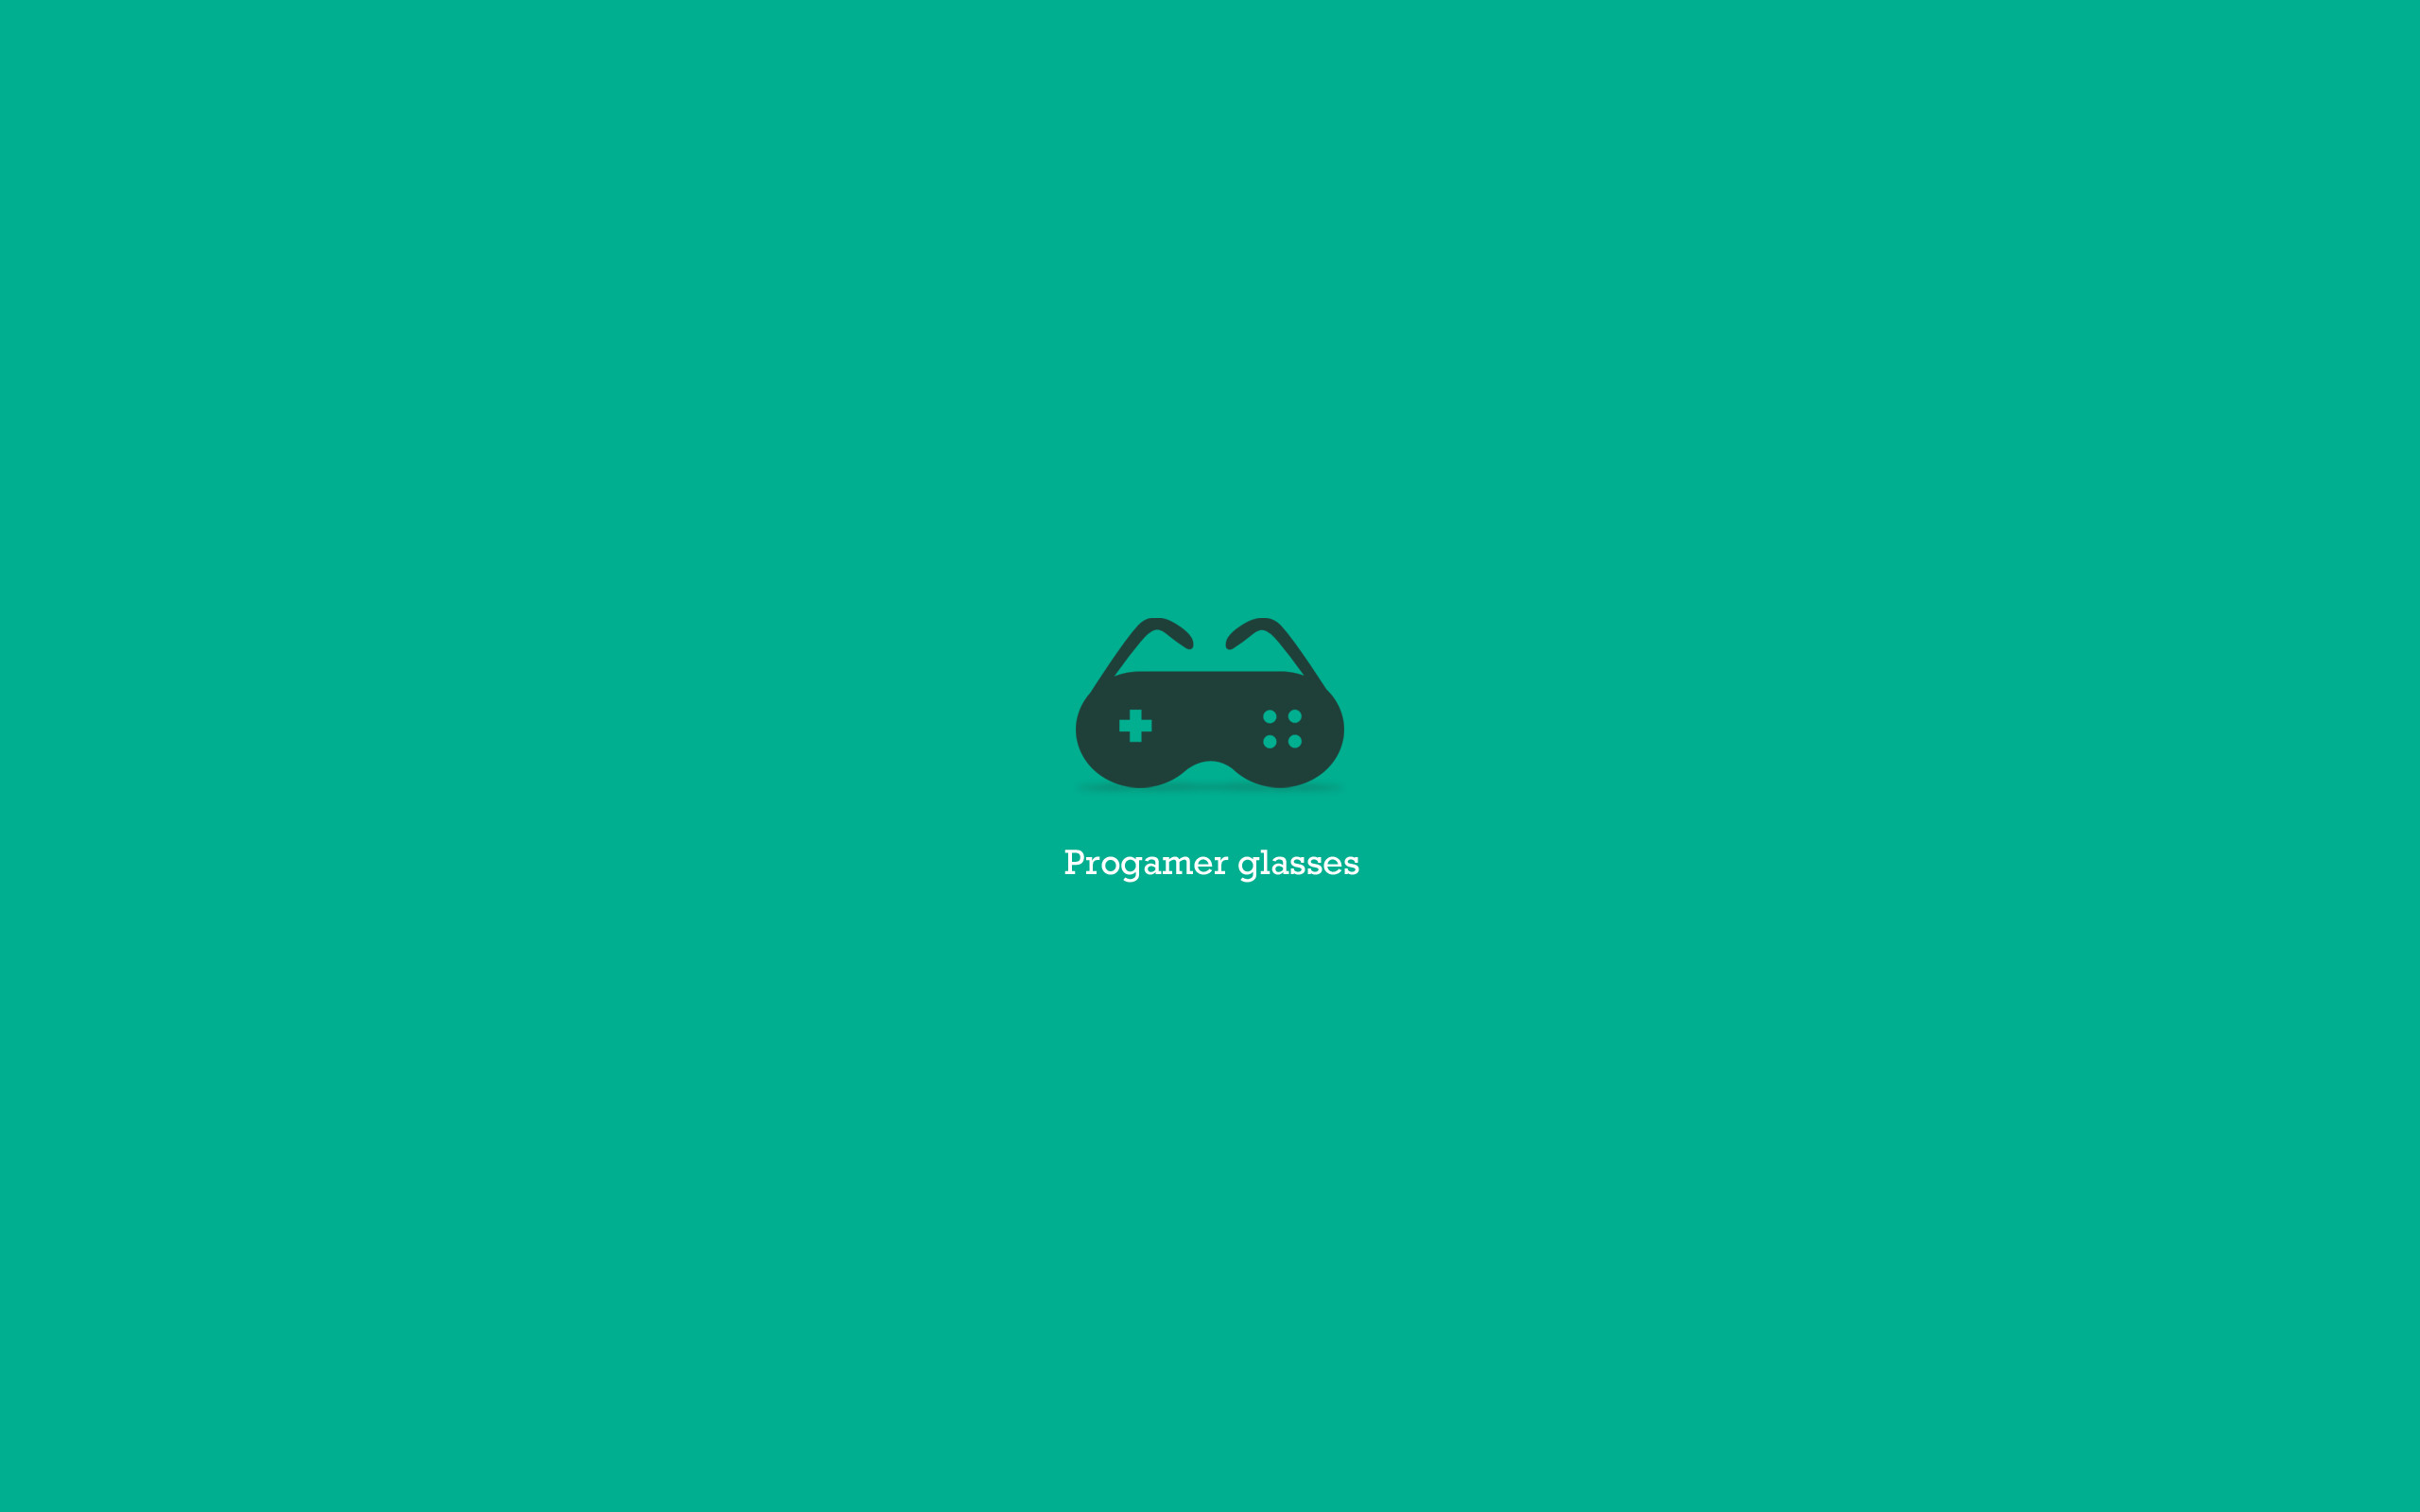 2560x1600 Progamer glasses minimalist wallpaper green